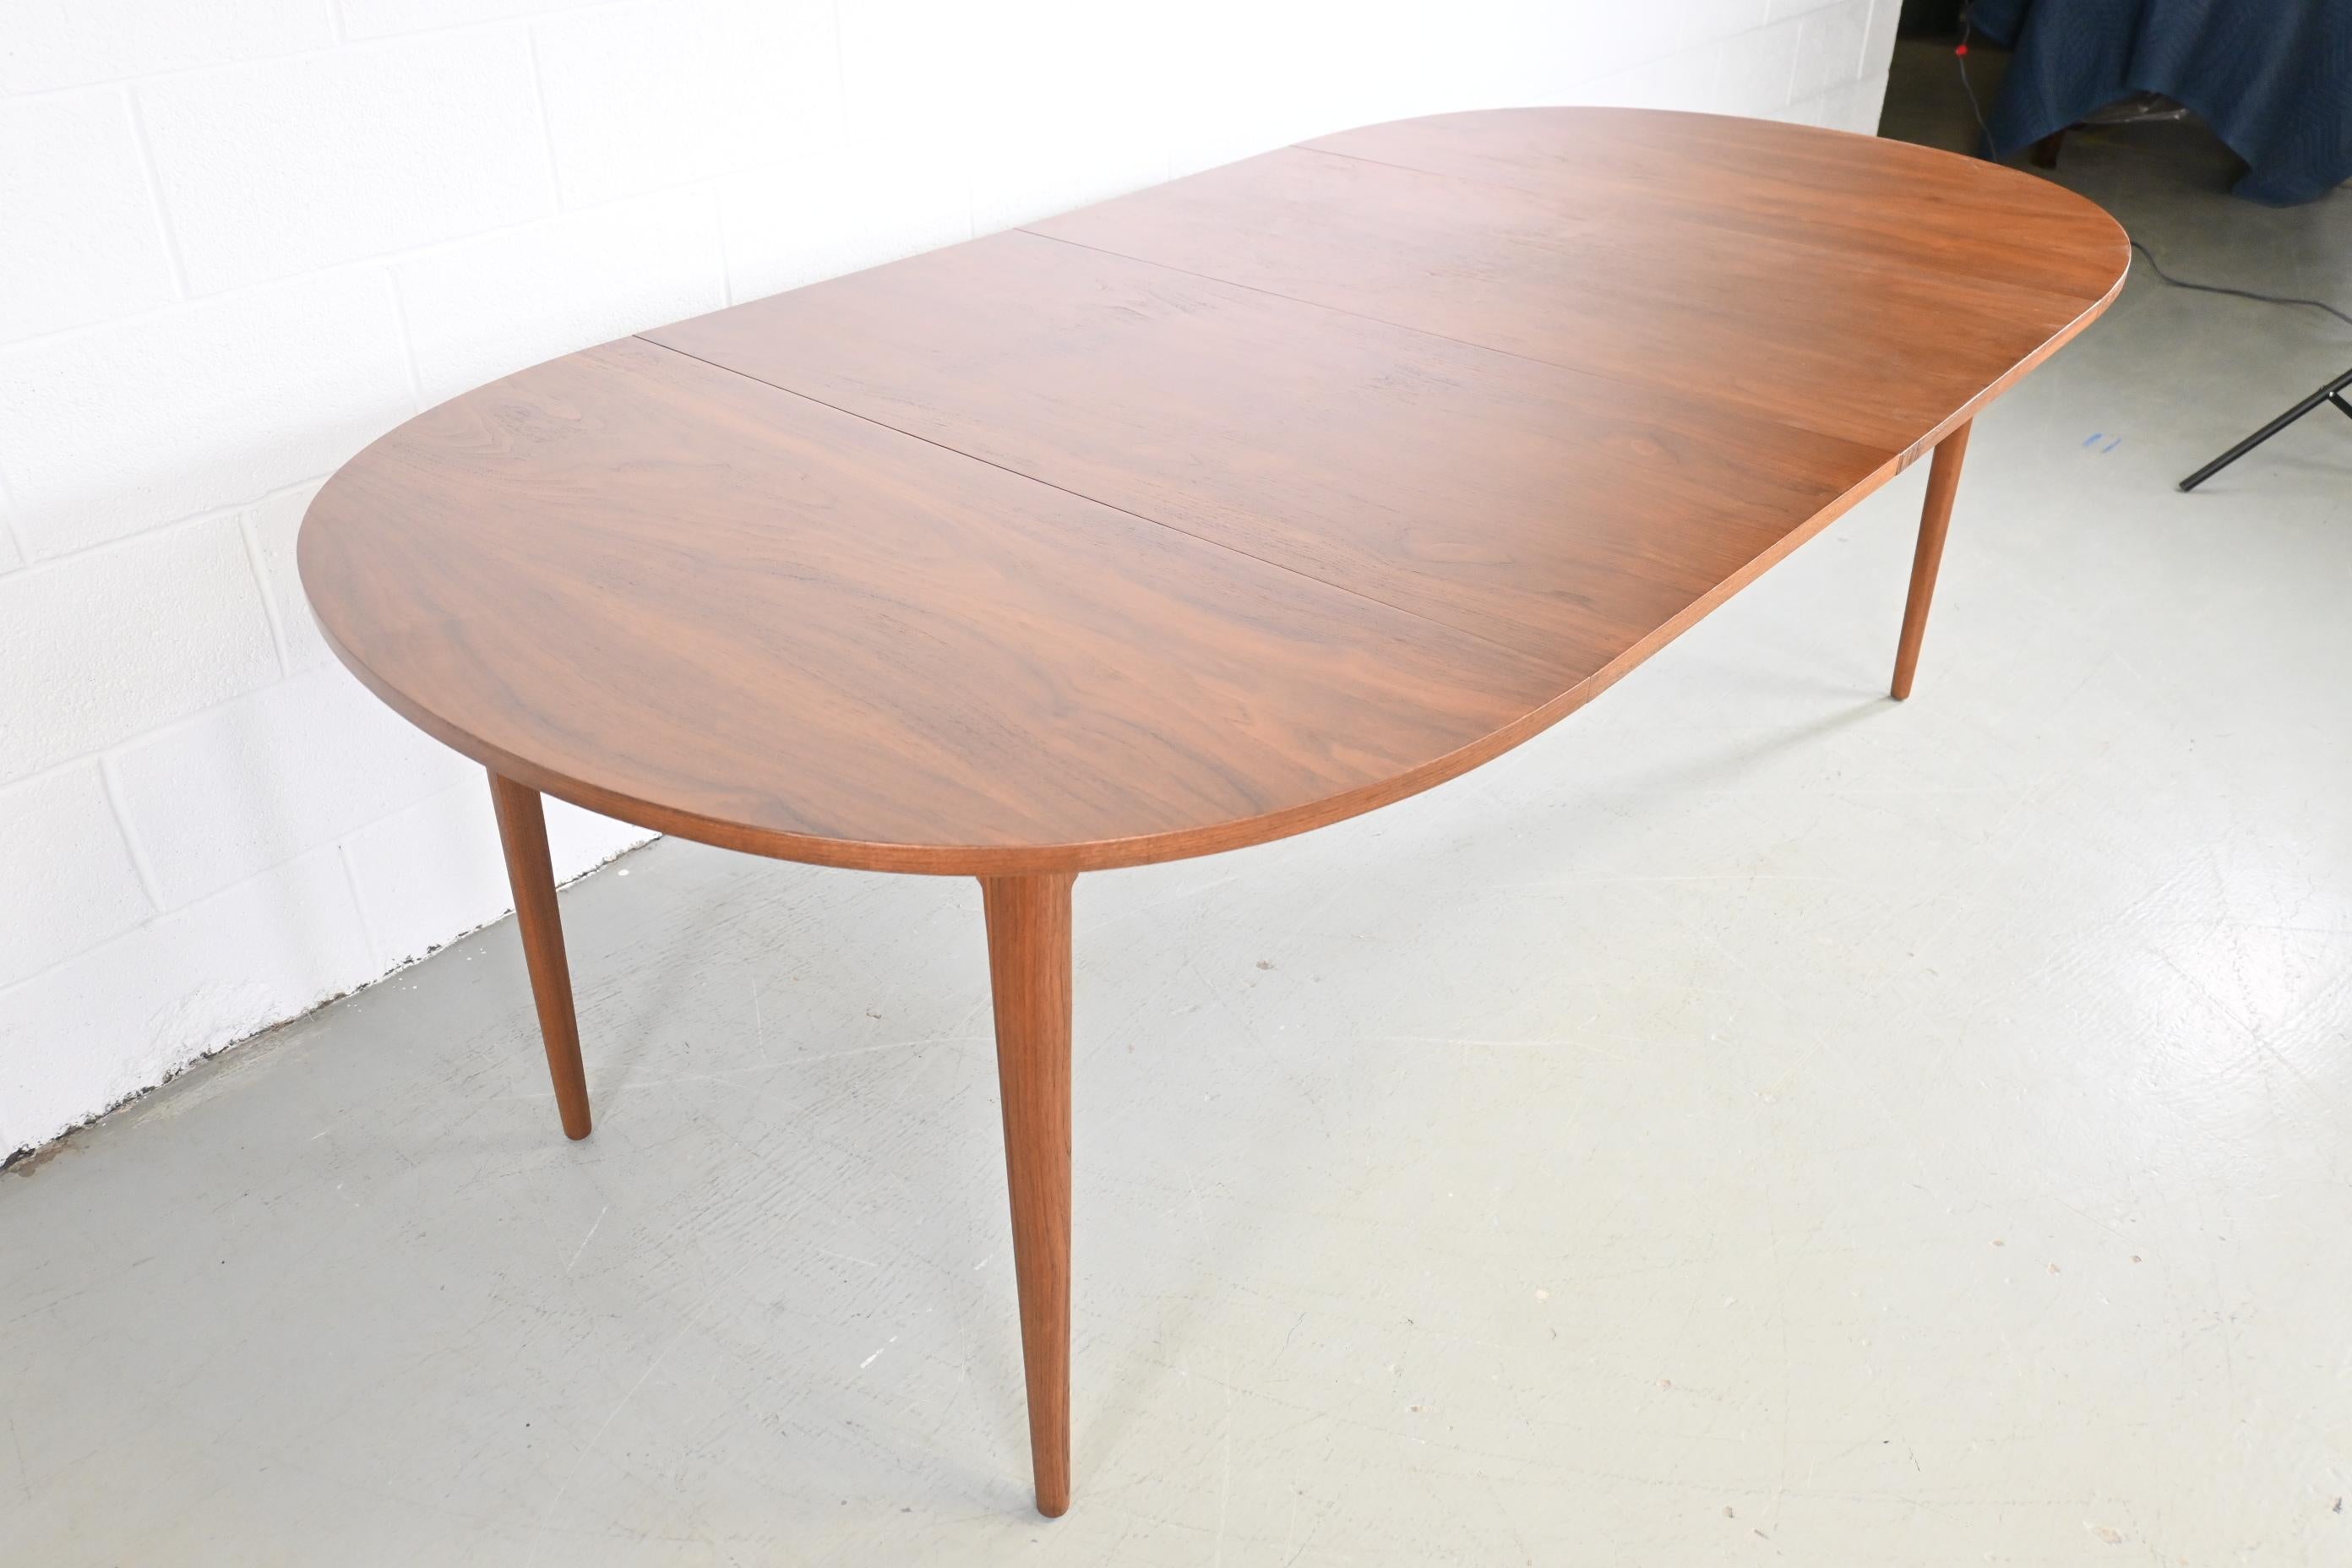 Kipp Stewart for Drexel Declaration Mid-Century Modern walnut extension dining table

Drexel Furniture, USA, 1950s

44.13 Wide x 44.13 Deep x 29.25 High. Fully extends to 88.13